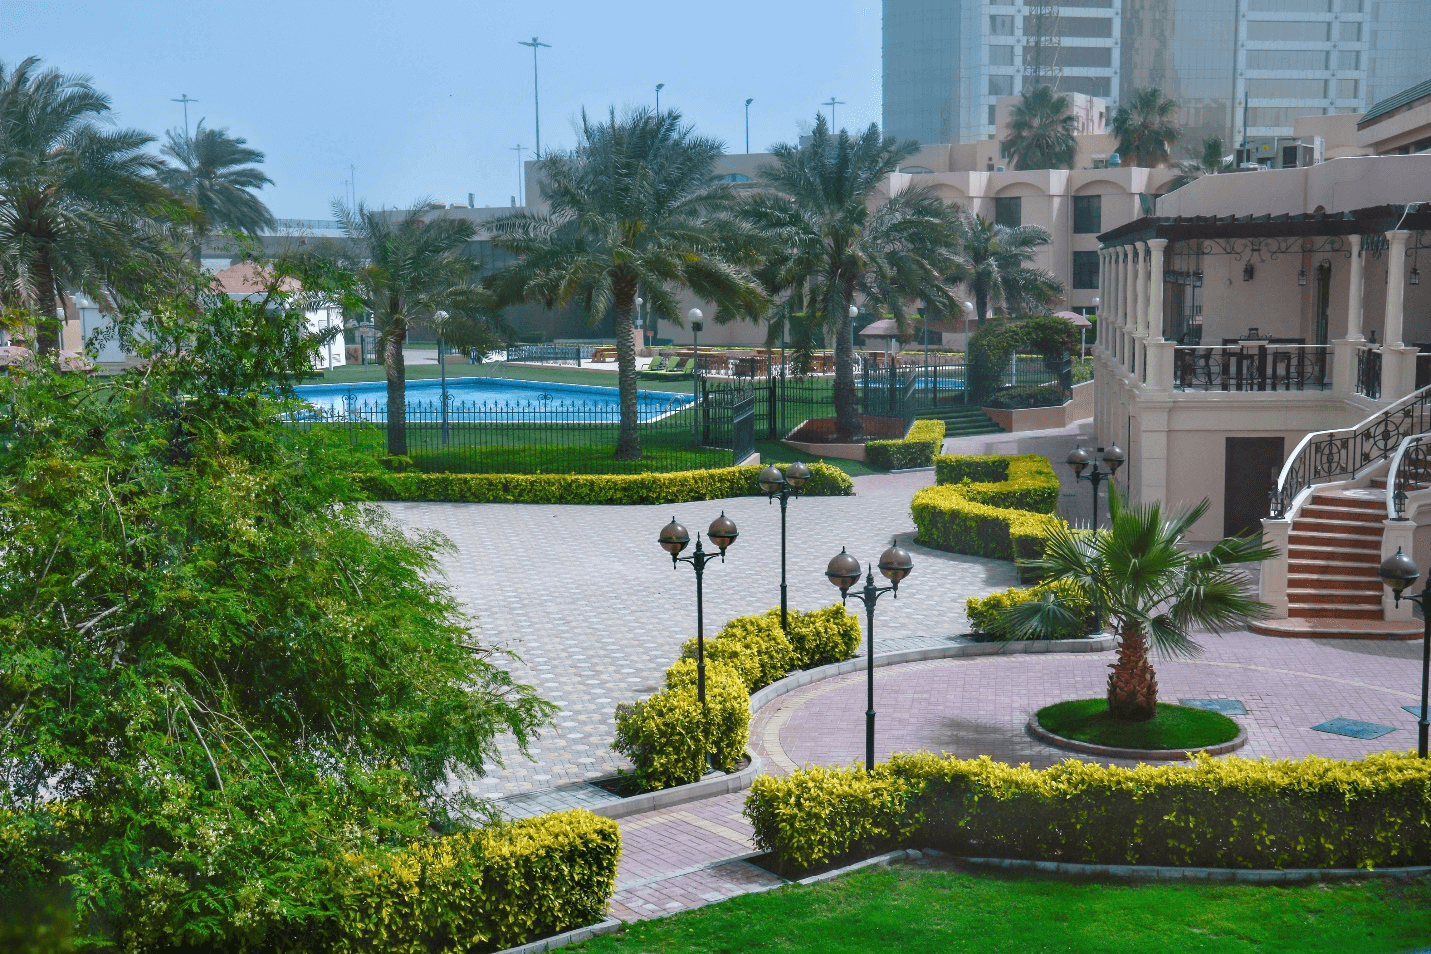 Crown Plaza Bahrain